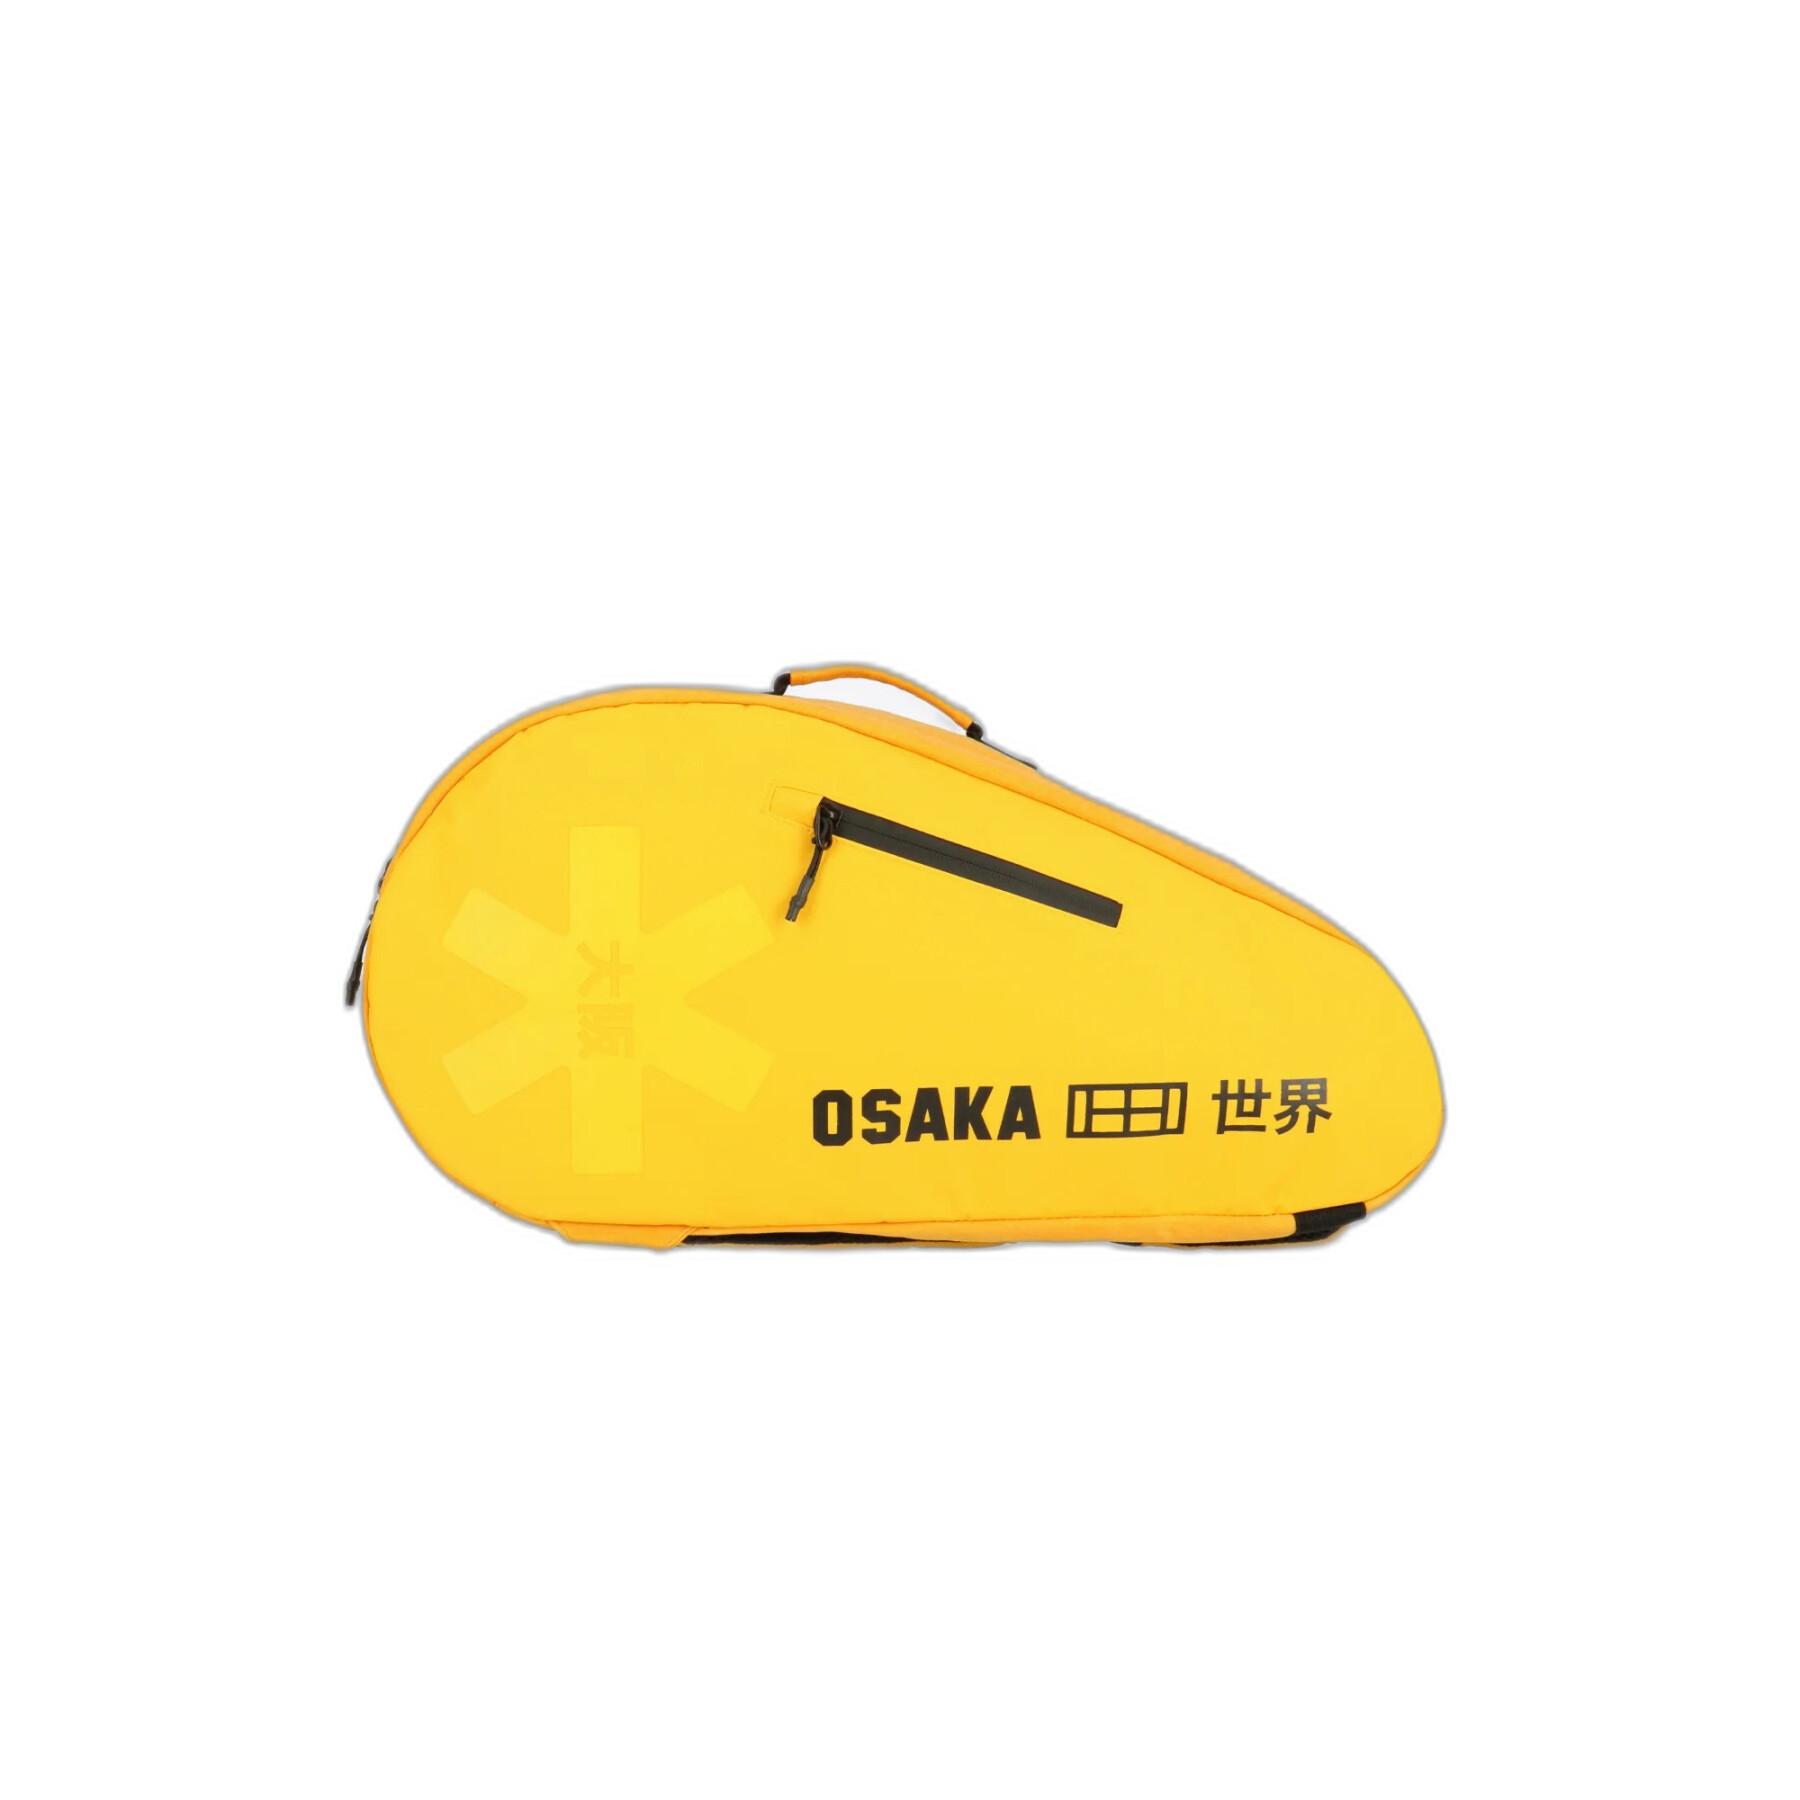 Bolsa para raqueta de pádel Osaka Pro Tour